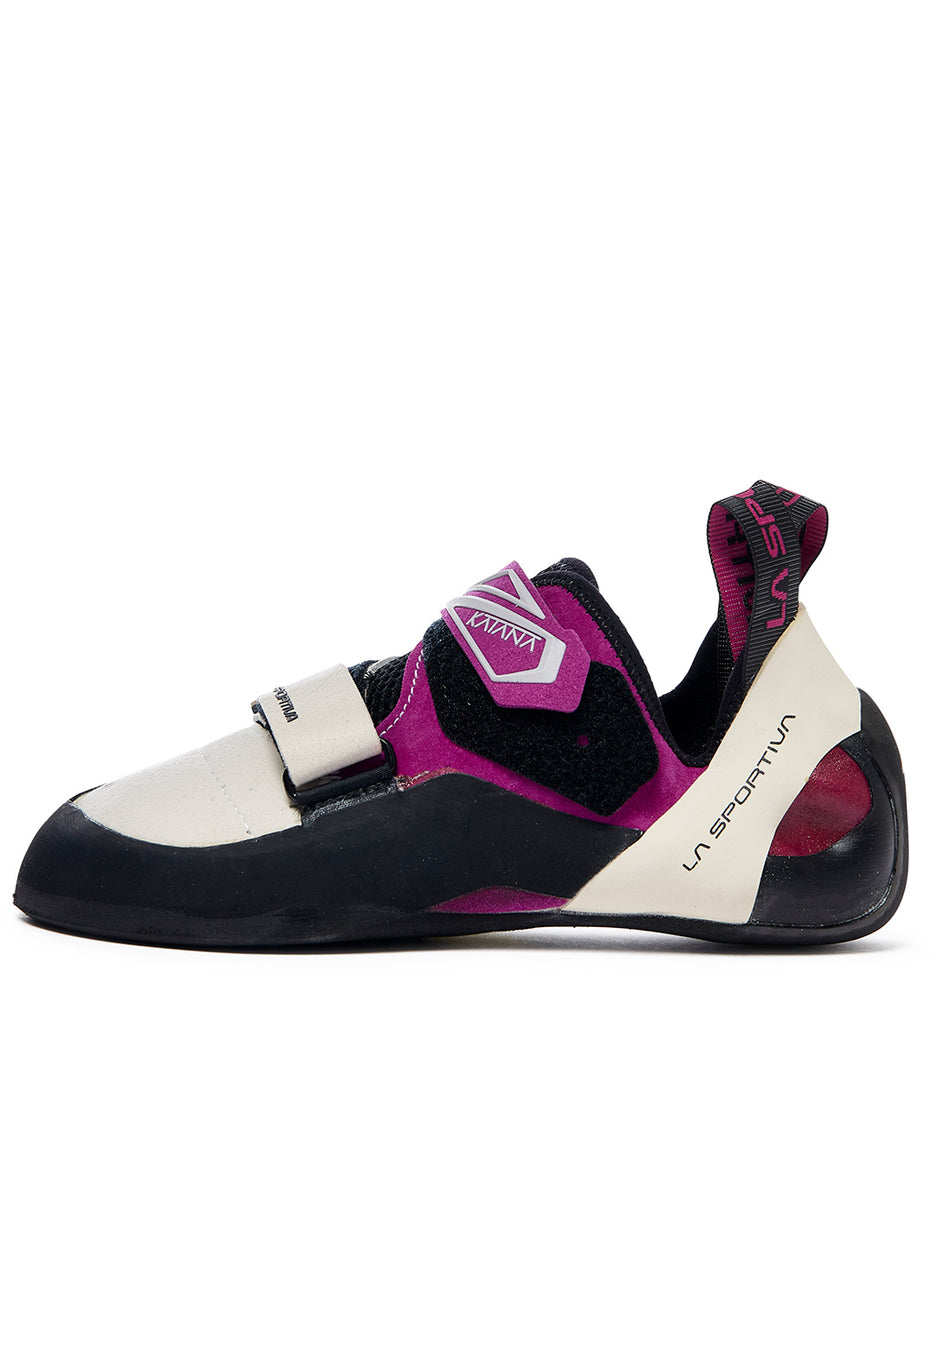 La Sportiva Katana Women's Shoes 2